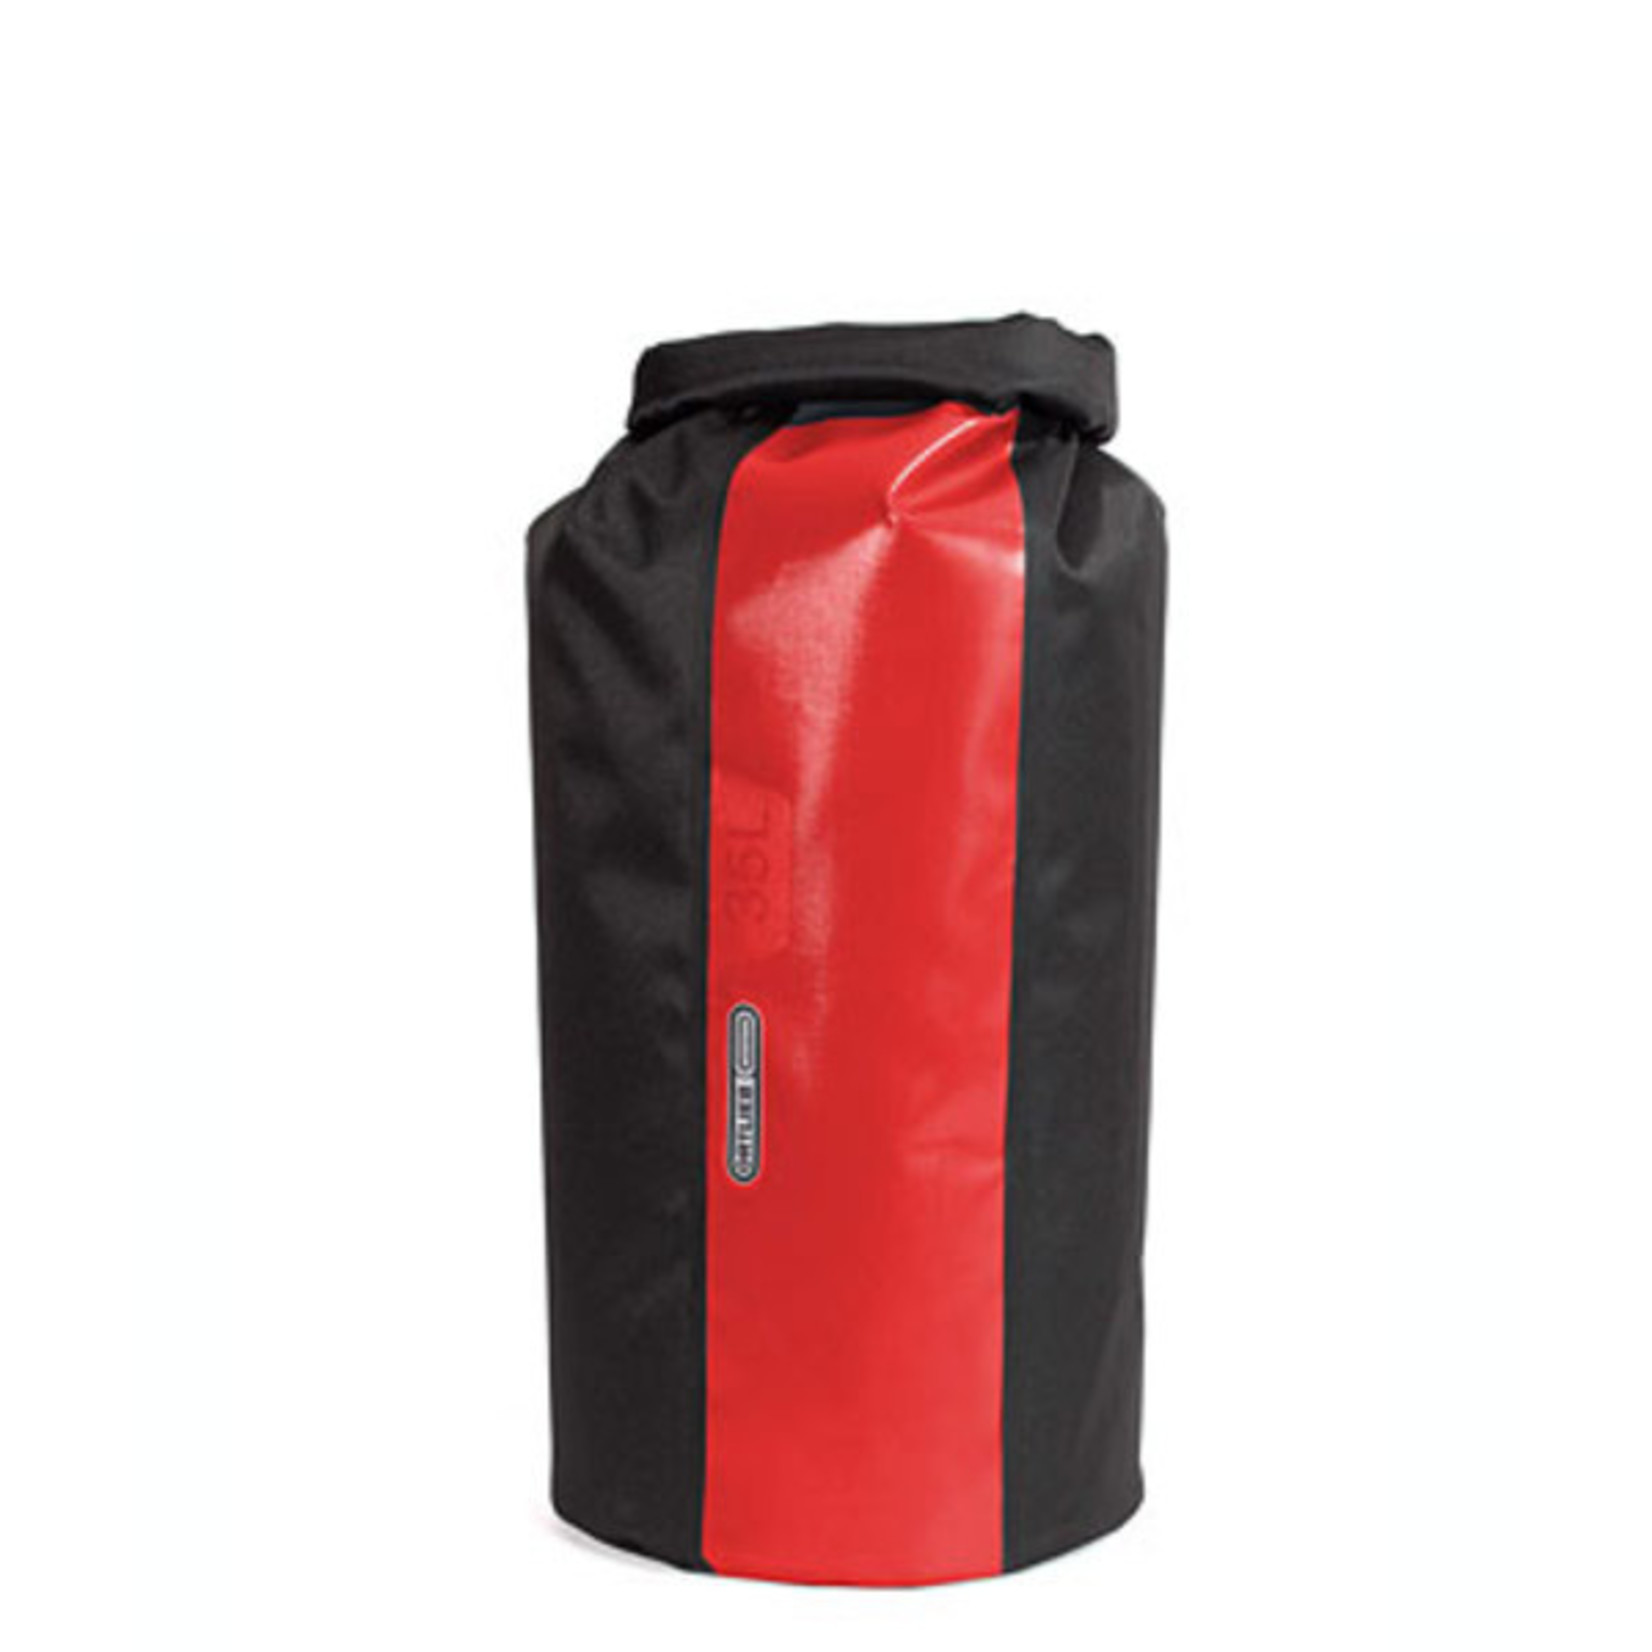 Ortlieb New Ortlieb PS 490 Dry Bag Strongest Heavy-Duty K5552 - 35L - Black-Red